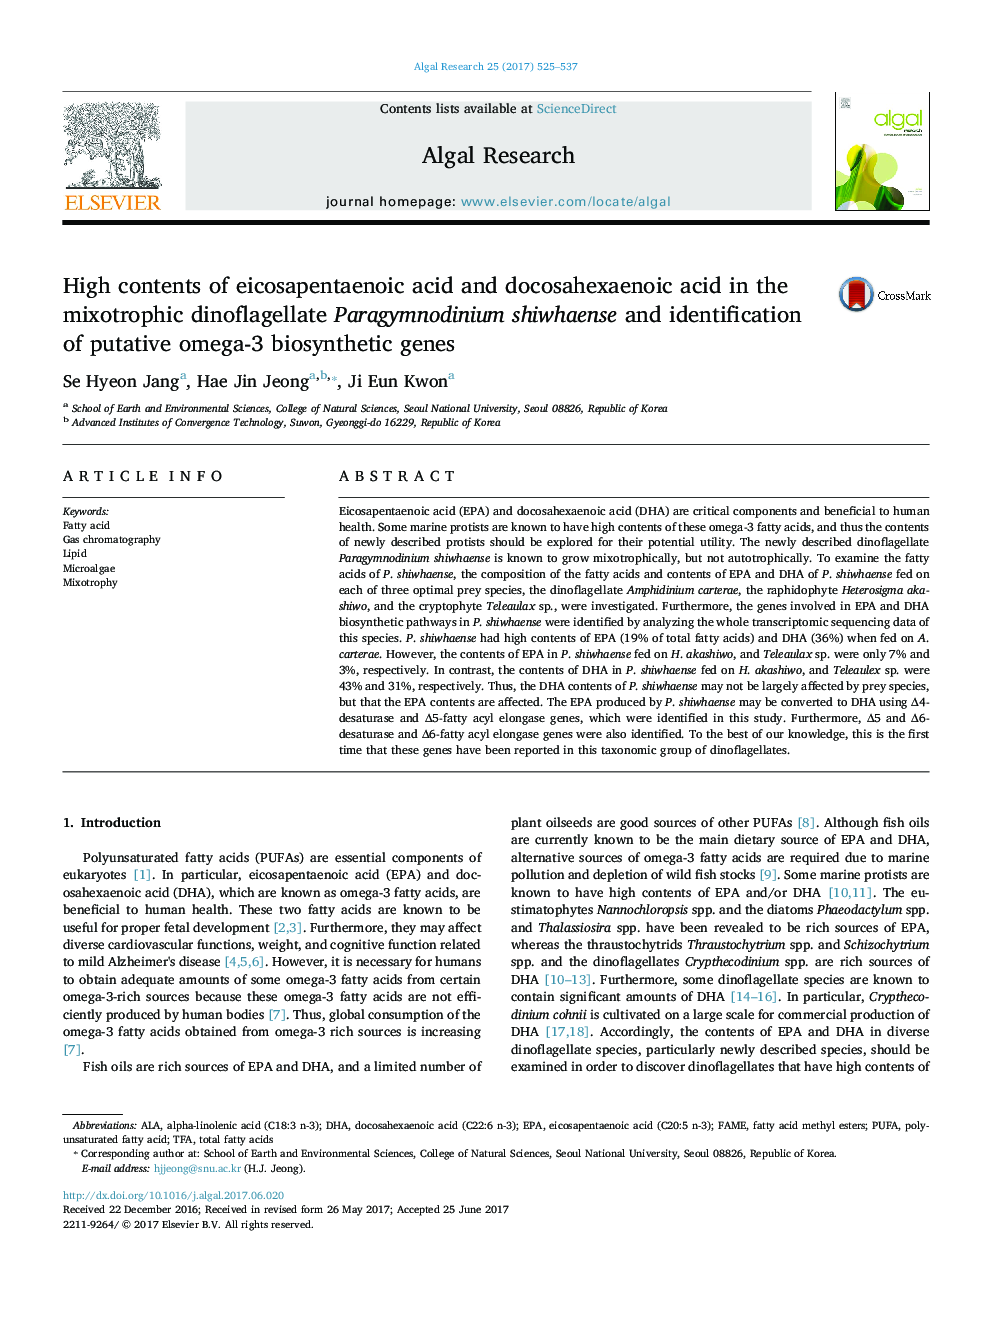 High contents of eicosapentaenoic acid and docosahexaenoic acid in the mixotrophic dinoflagellate Paragymnodinium shiwhaense and identification of putative omega-3 biosynthetic genes